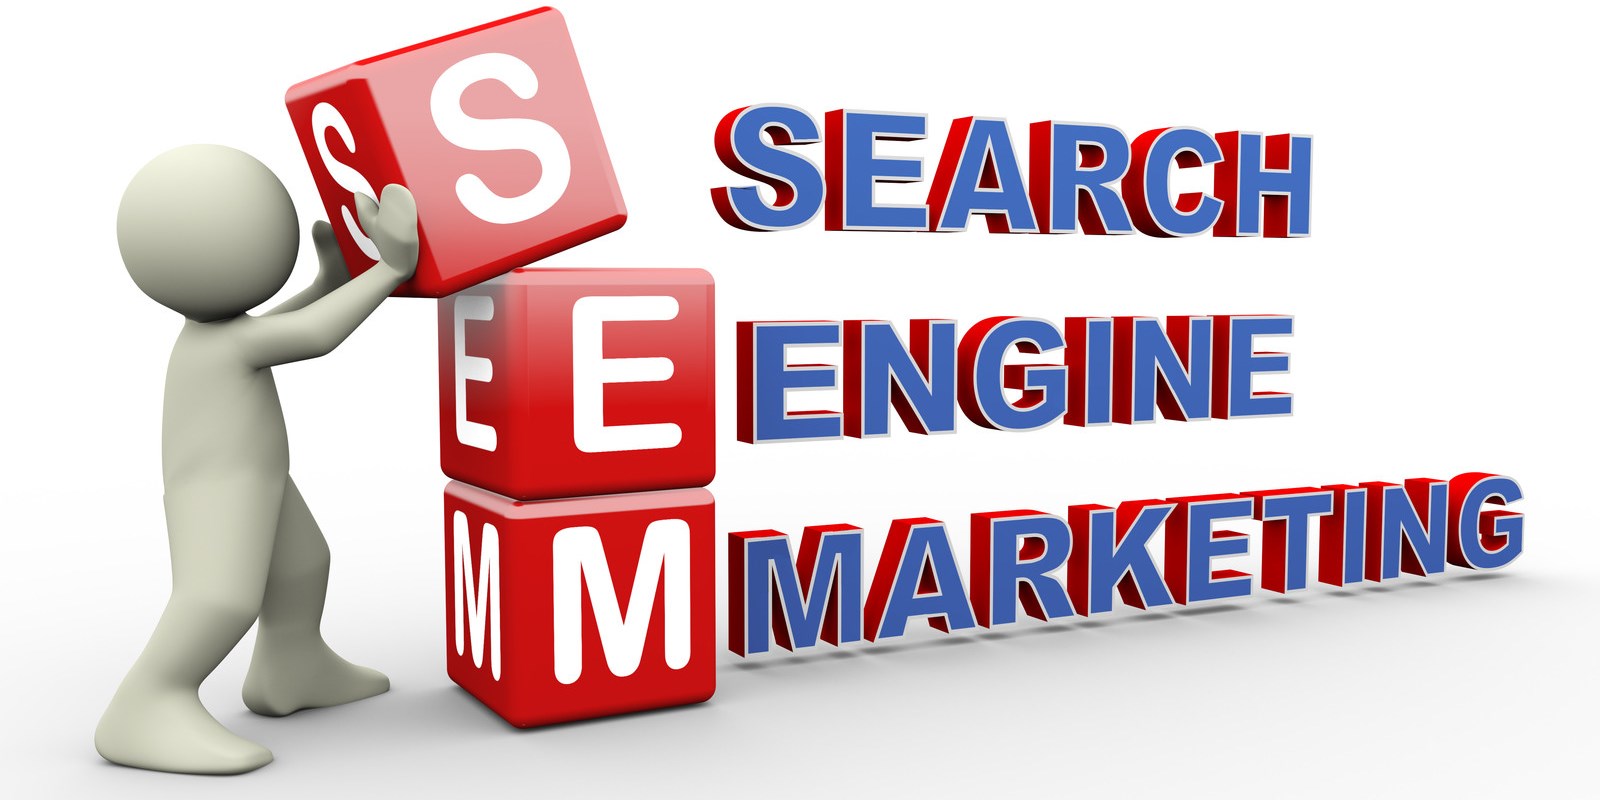 Search-engine-marketing